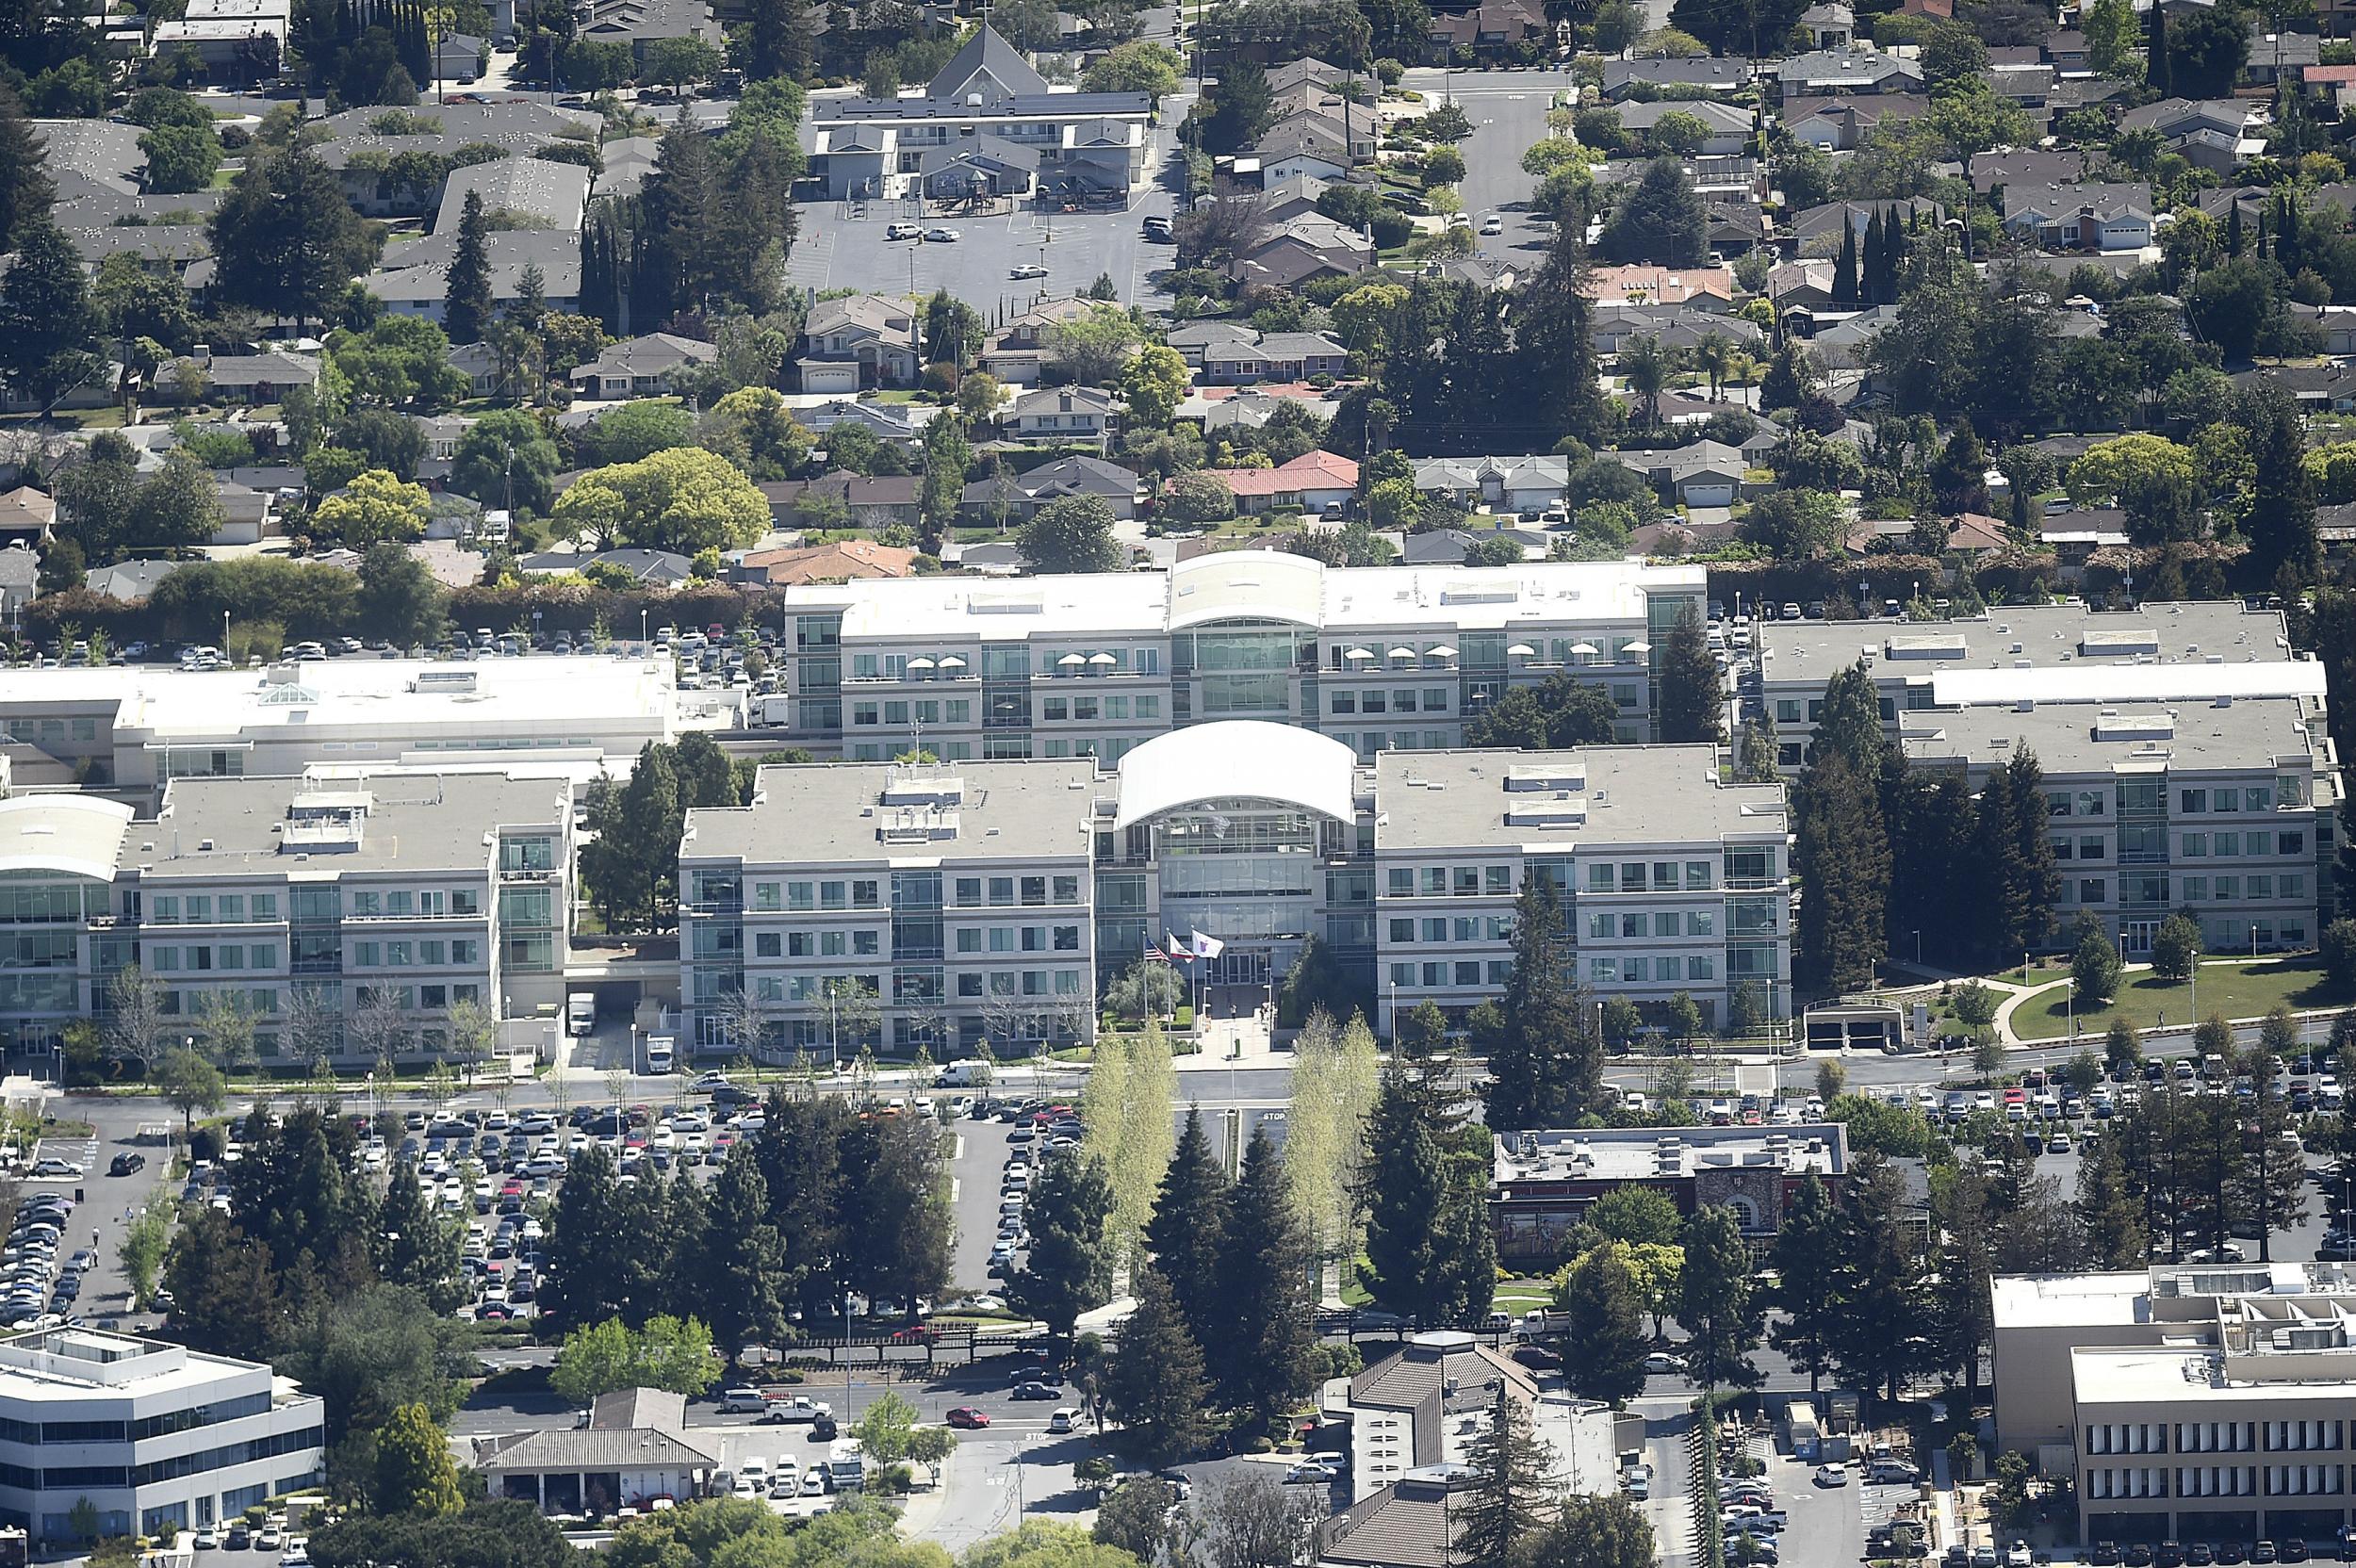 The Apple headquarters in California